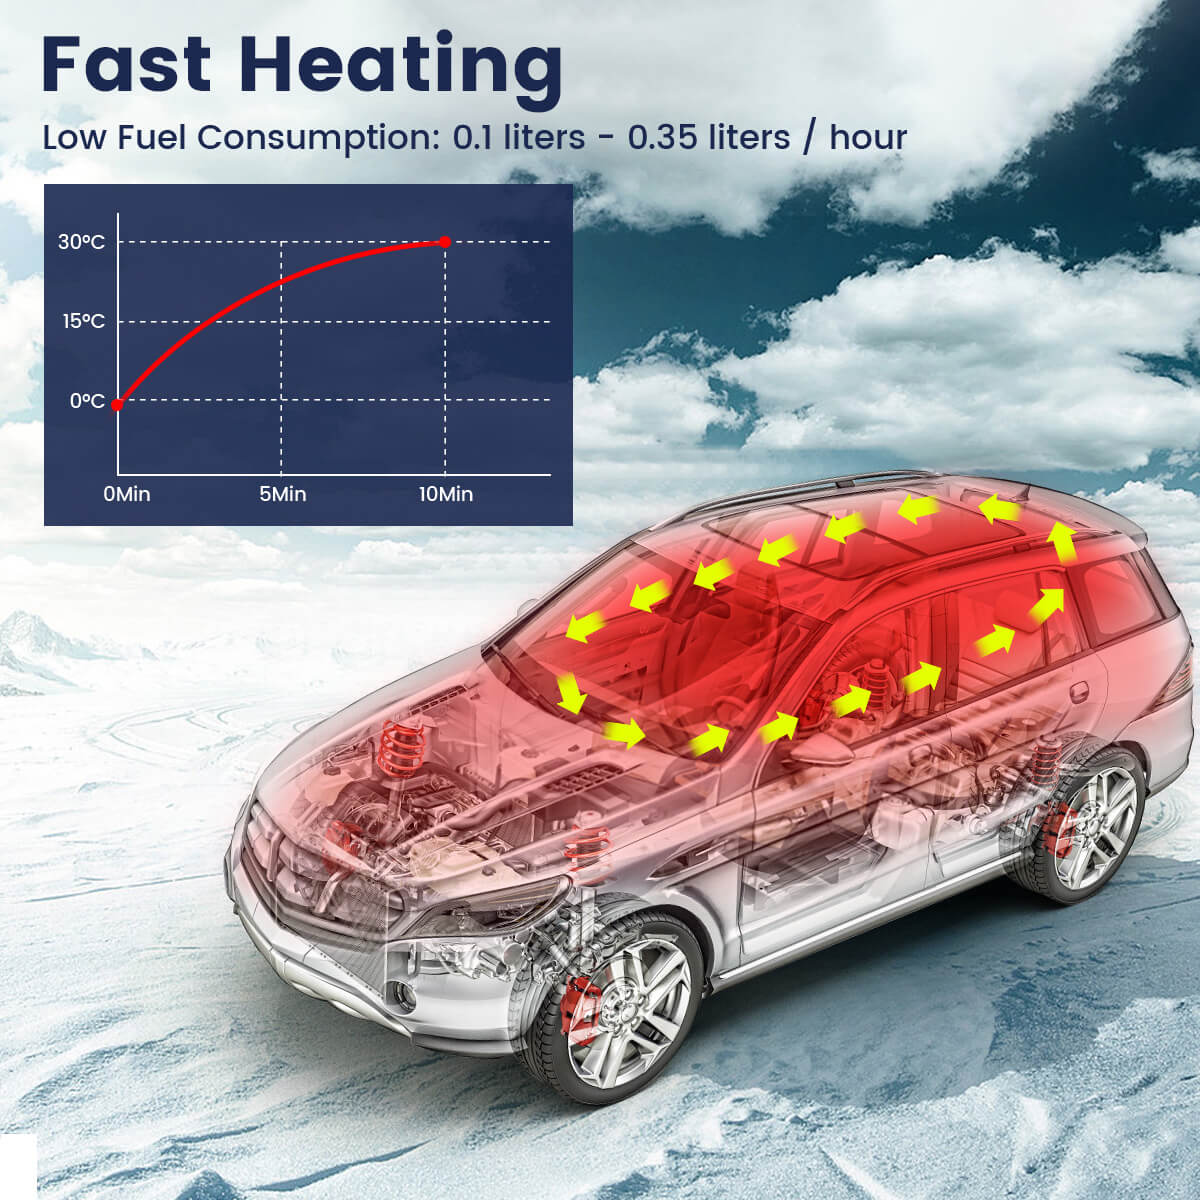 ss2-diesel-heater-fast-heating